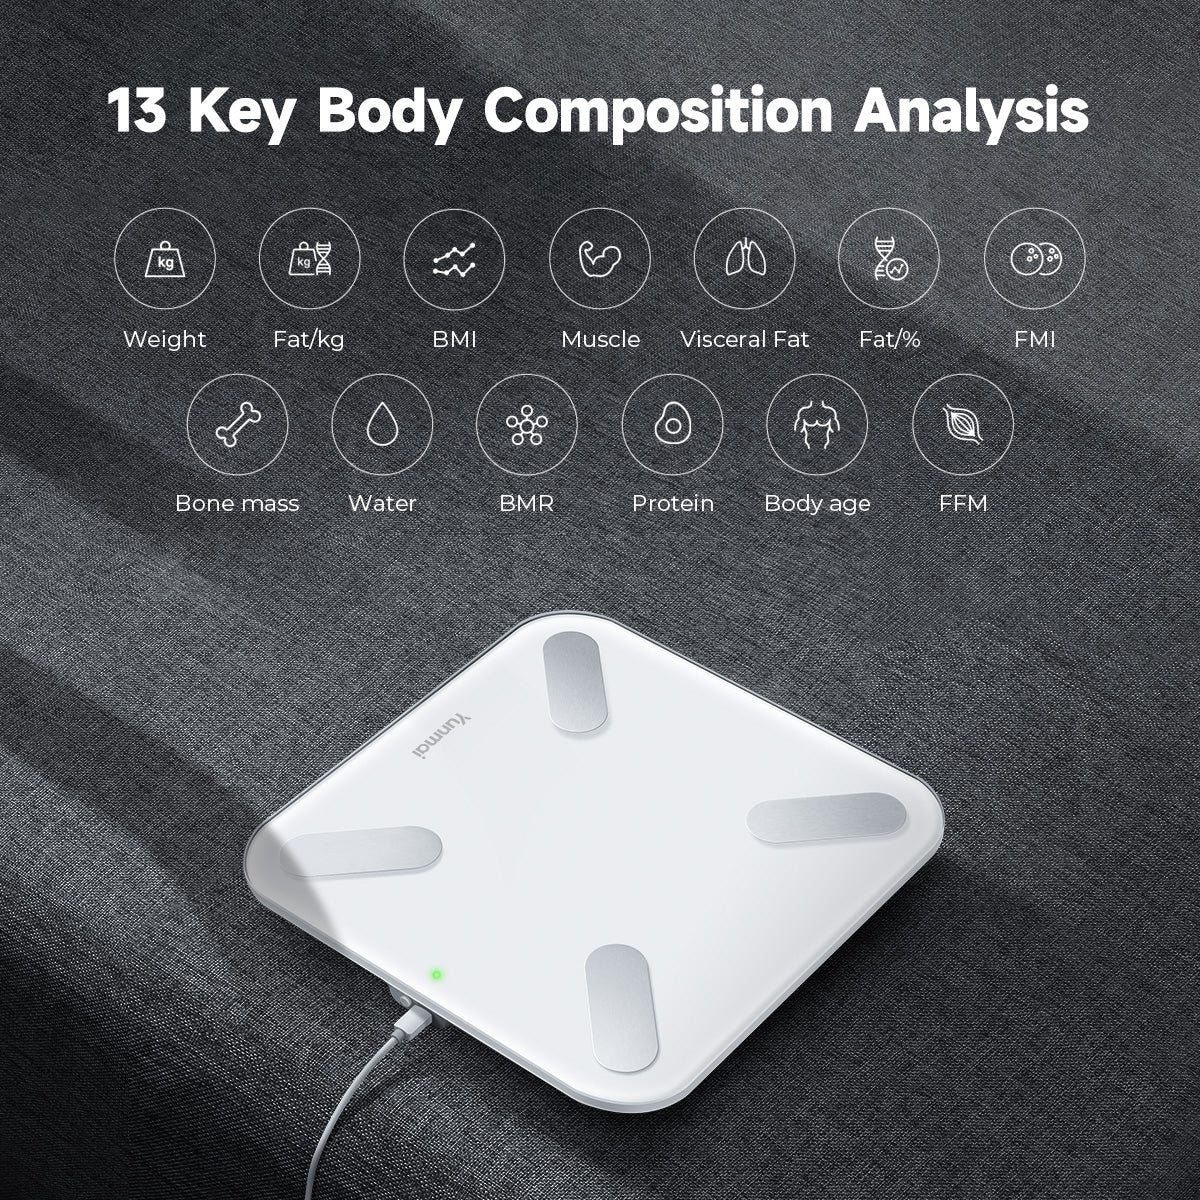 Yunmai M1806 Pro Body Fat Smart Scale Body Composition Monitor